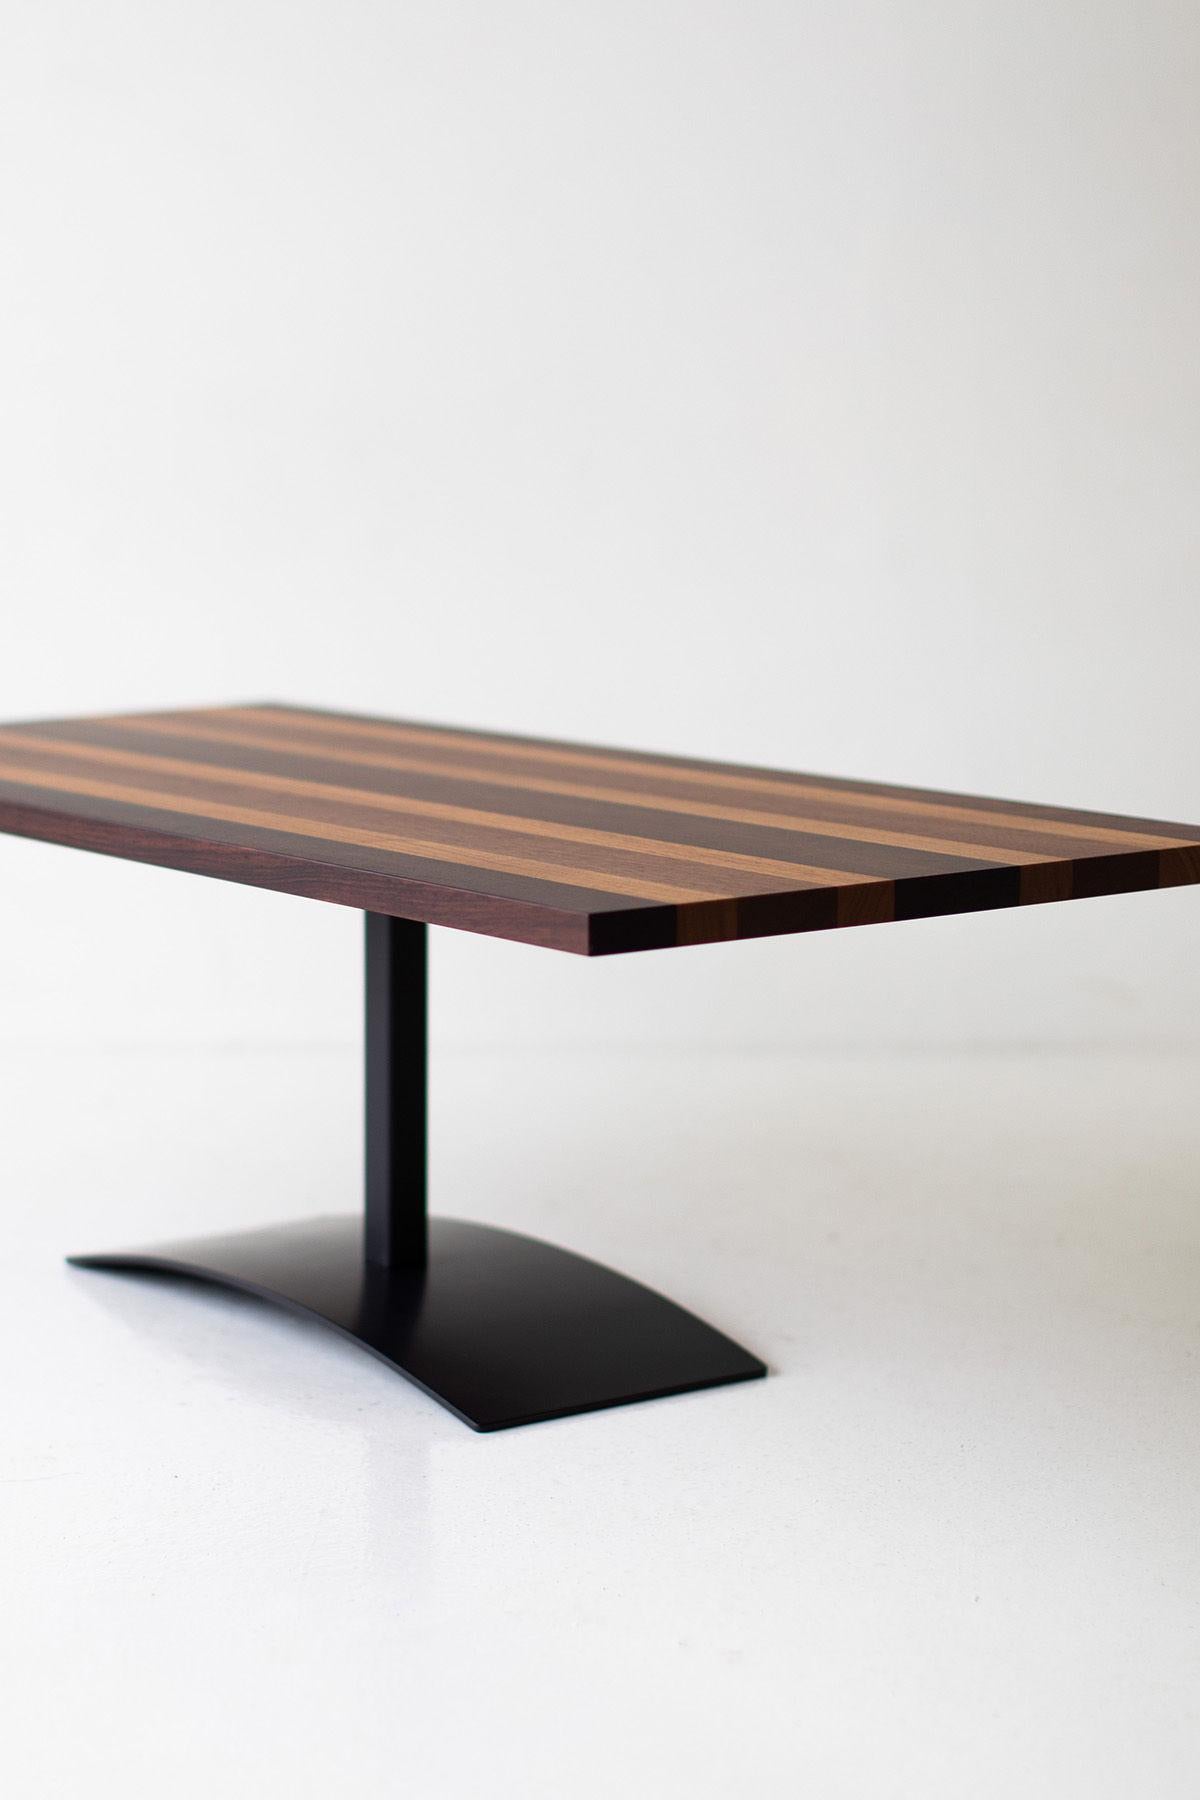 American CraftAssociates Coffee Tables, Milo Baughman Coffee Table, Striped Top For Sale